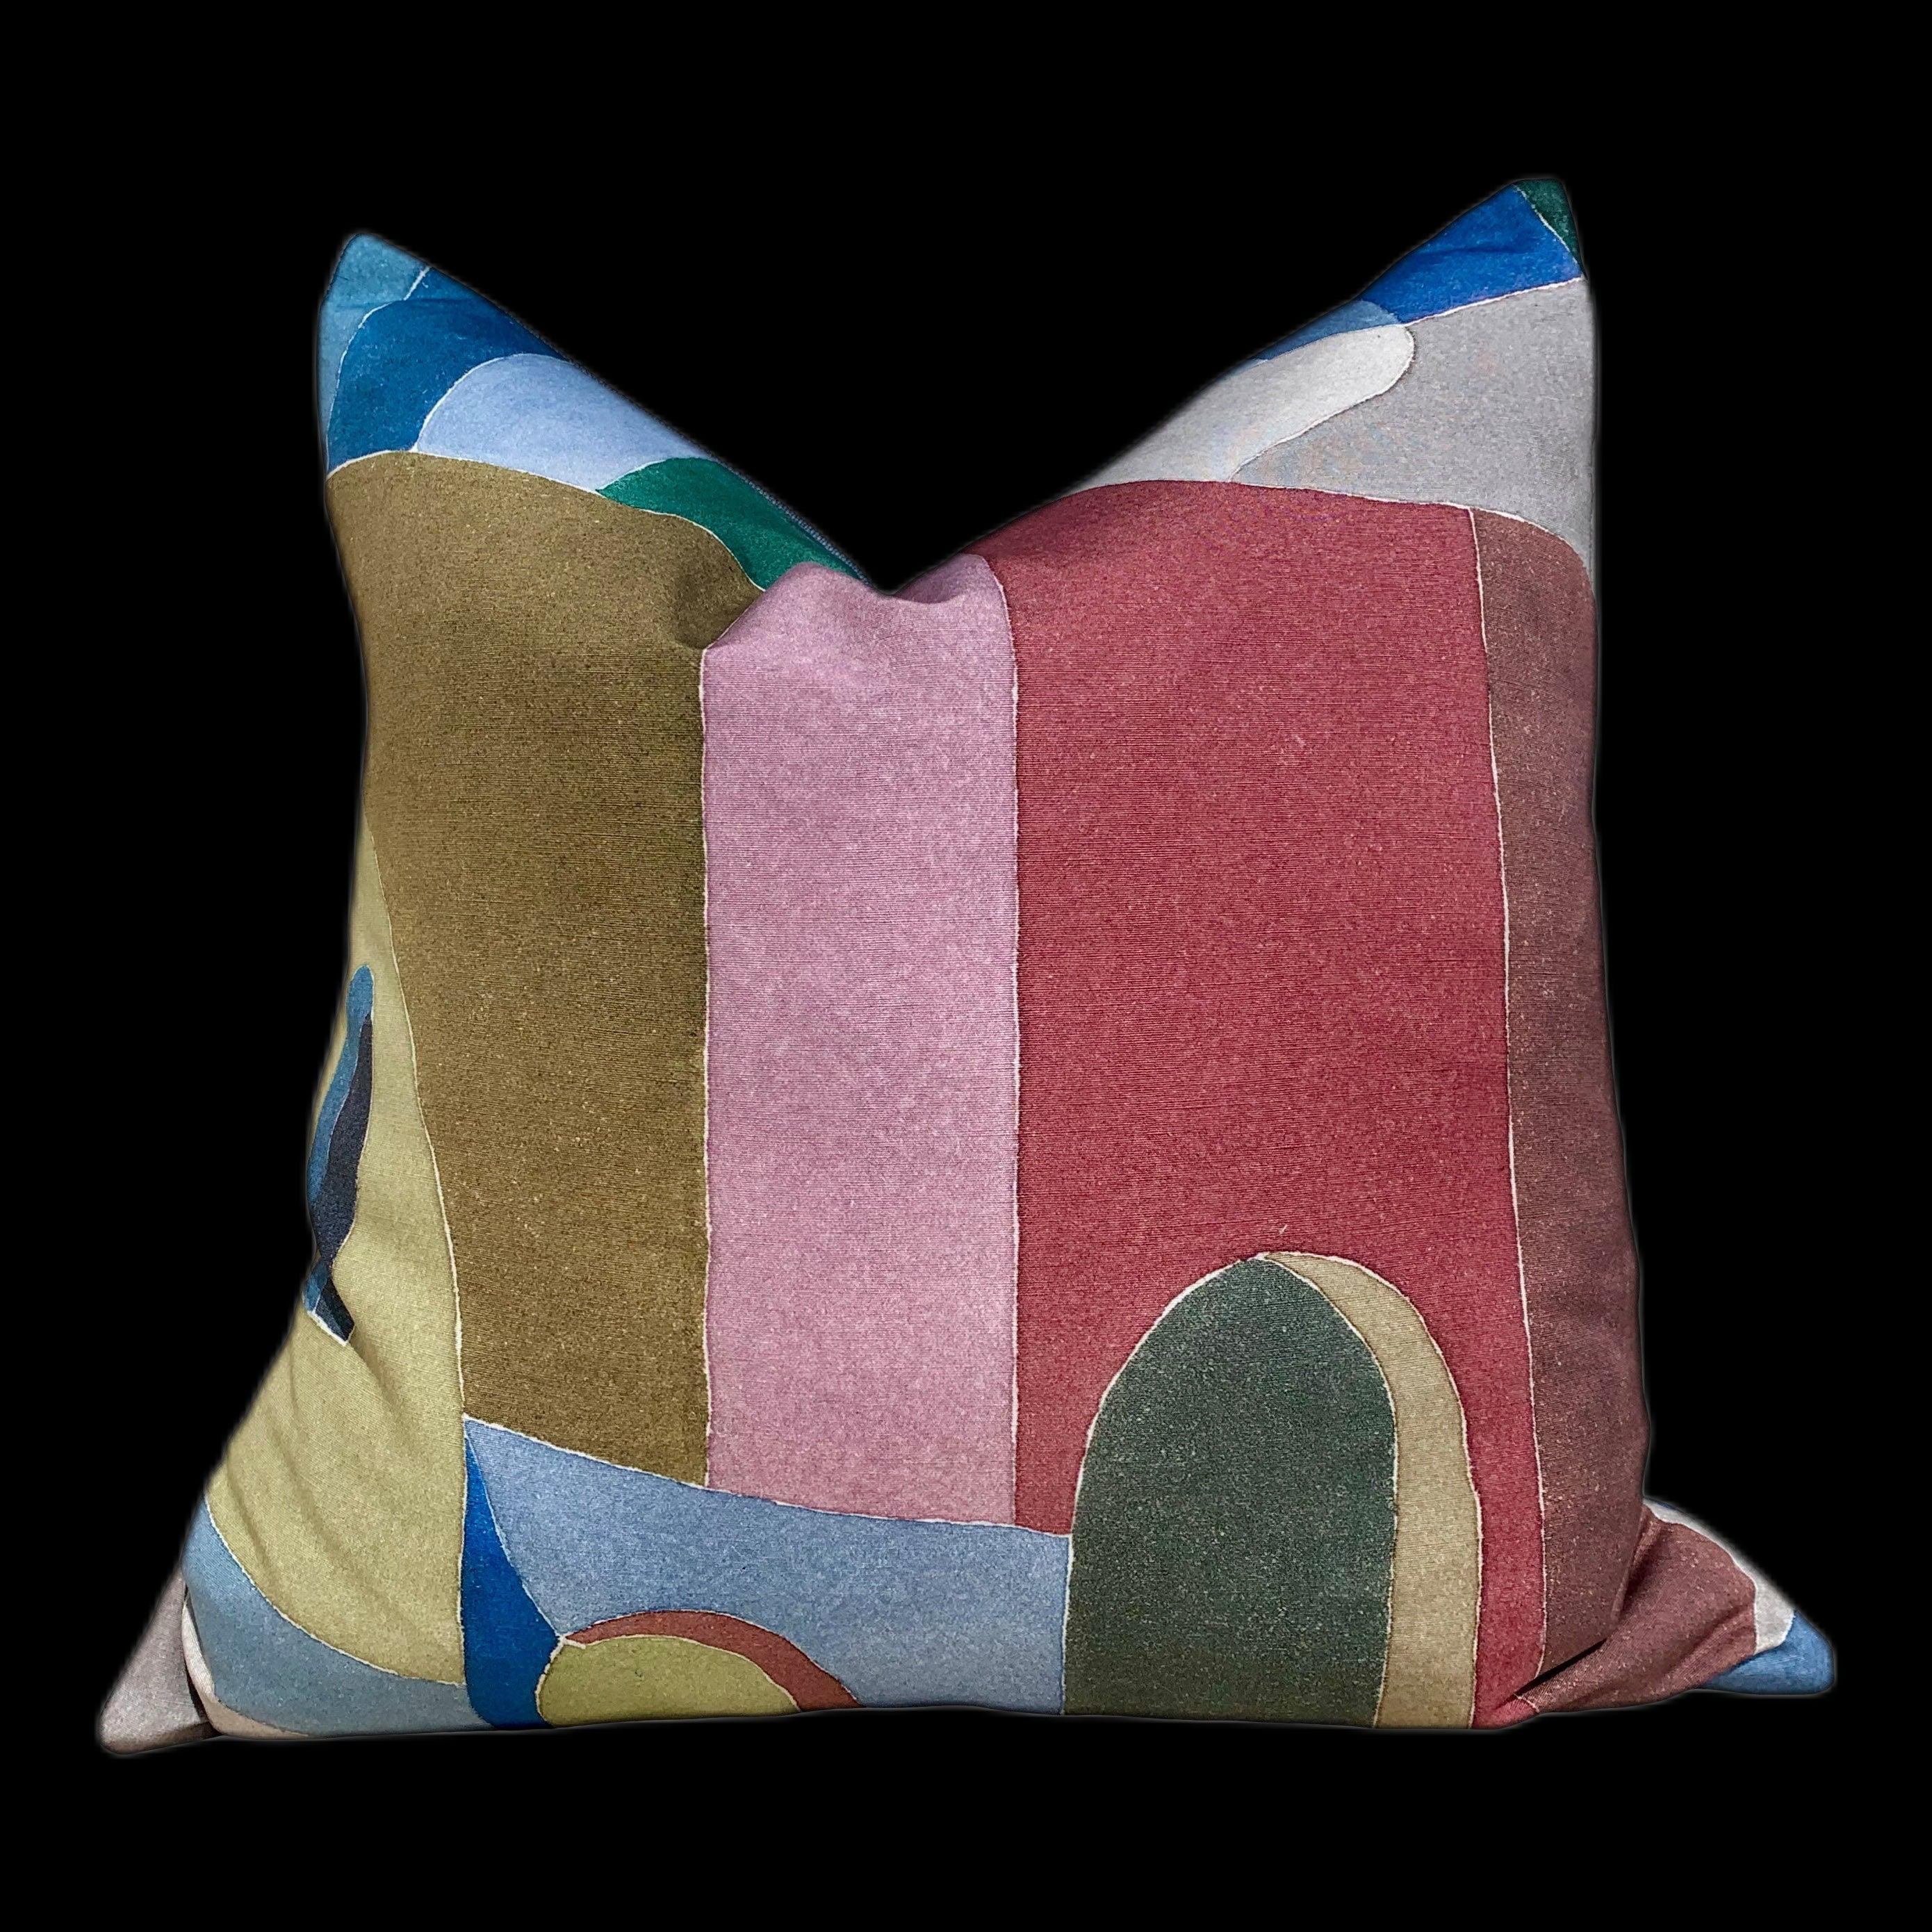 Designer Sahara Pillow in Jewel. Multi Colored Lumbar Pillow // Turquoise Pillow Cover // Euro Sham Pillow // Accent Pillow